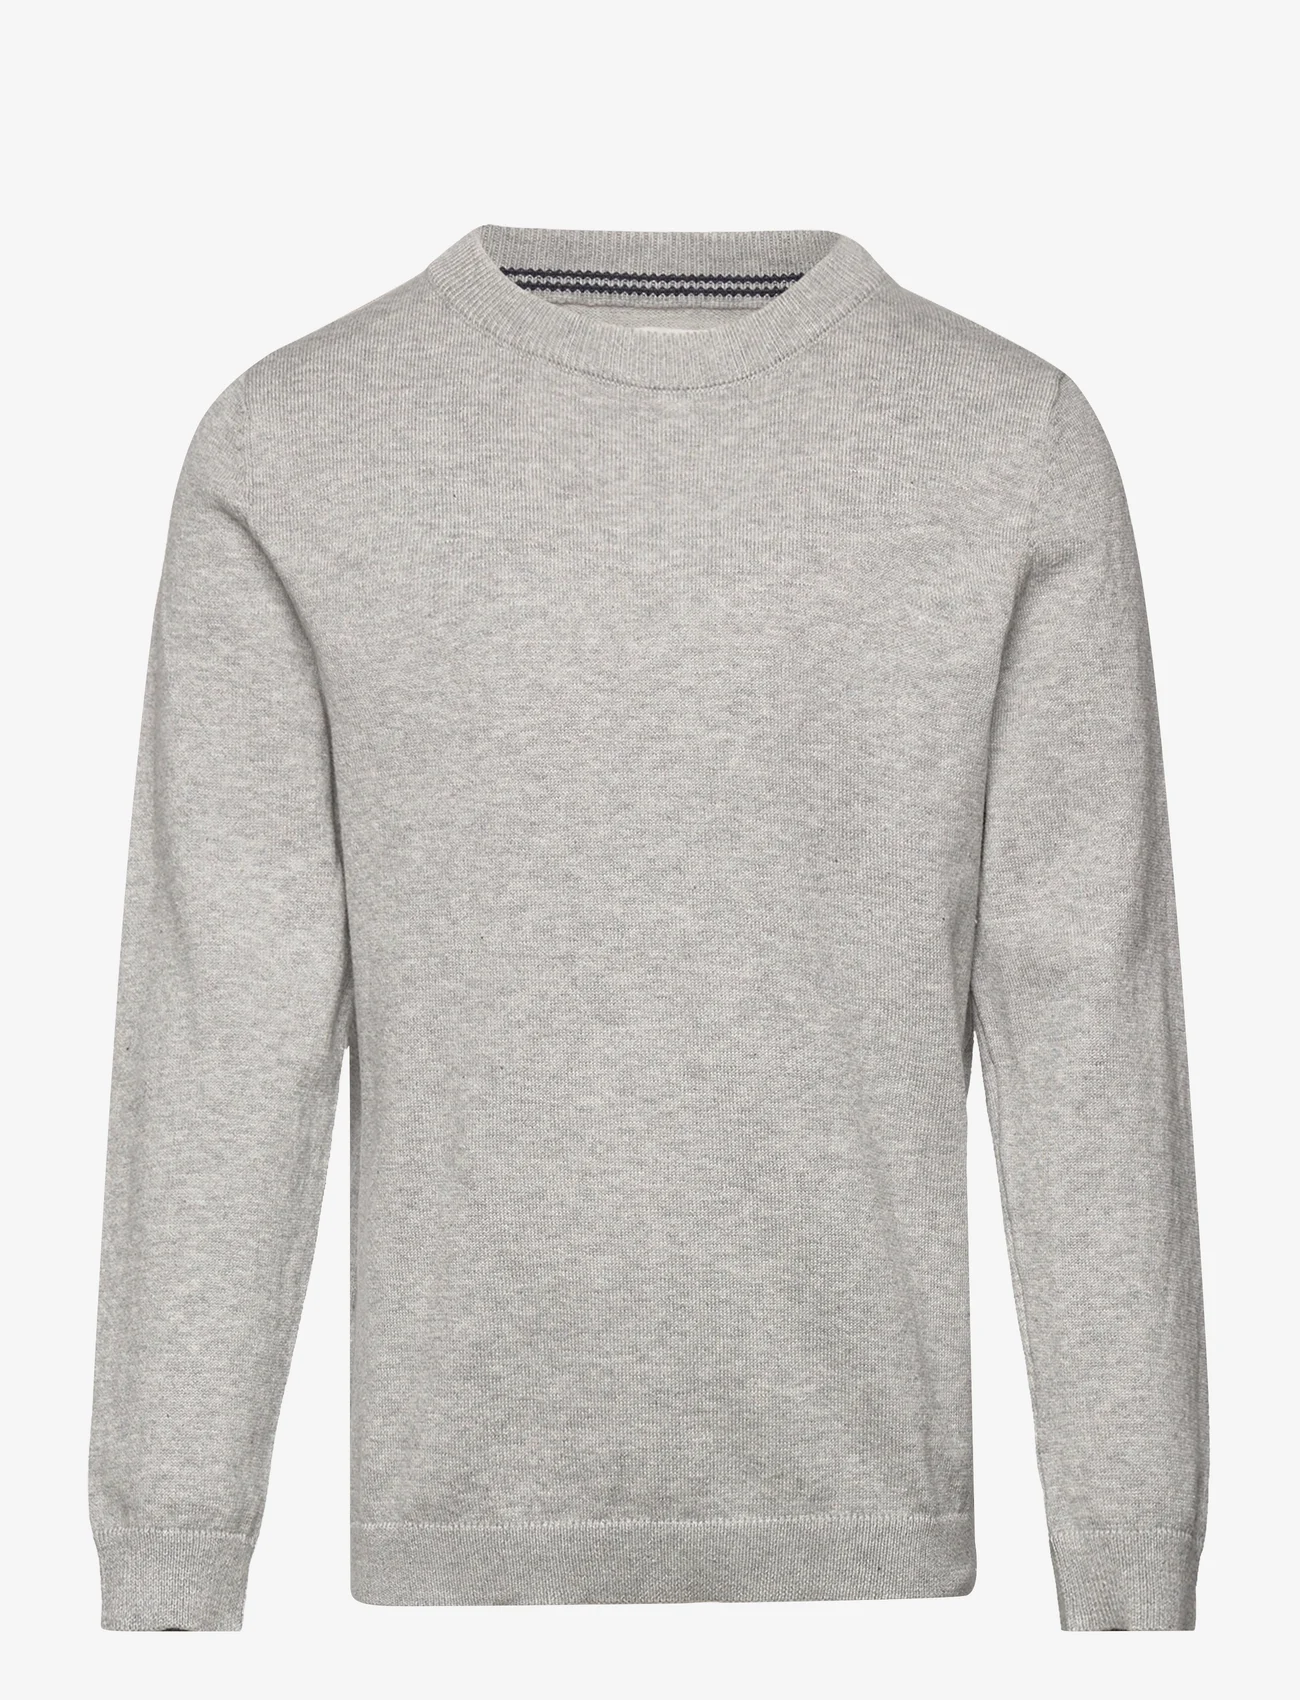 Mango - Knit cotton sweater - trøjer - medium grey - 0